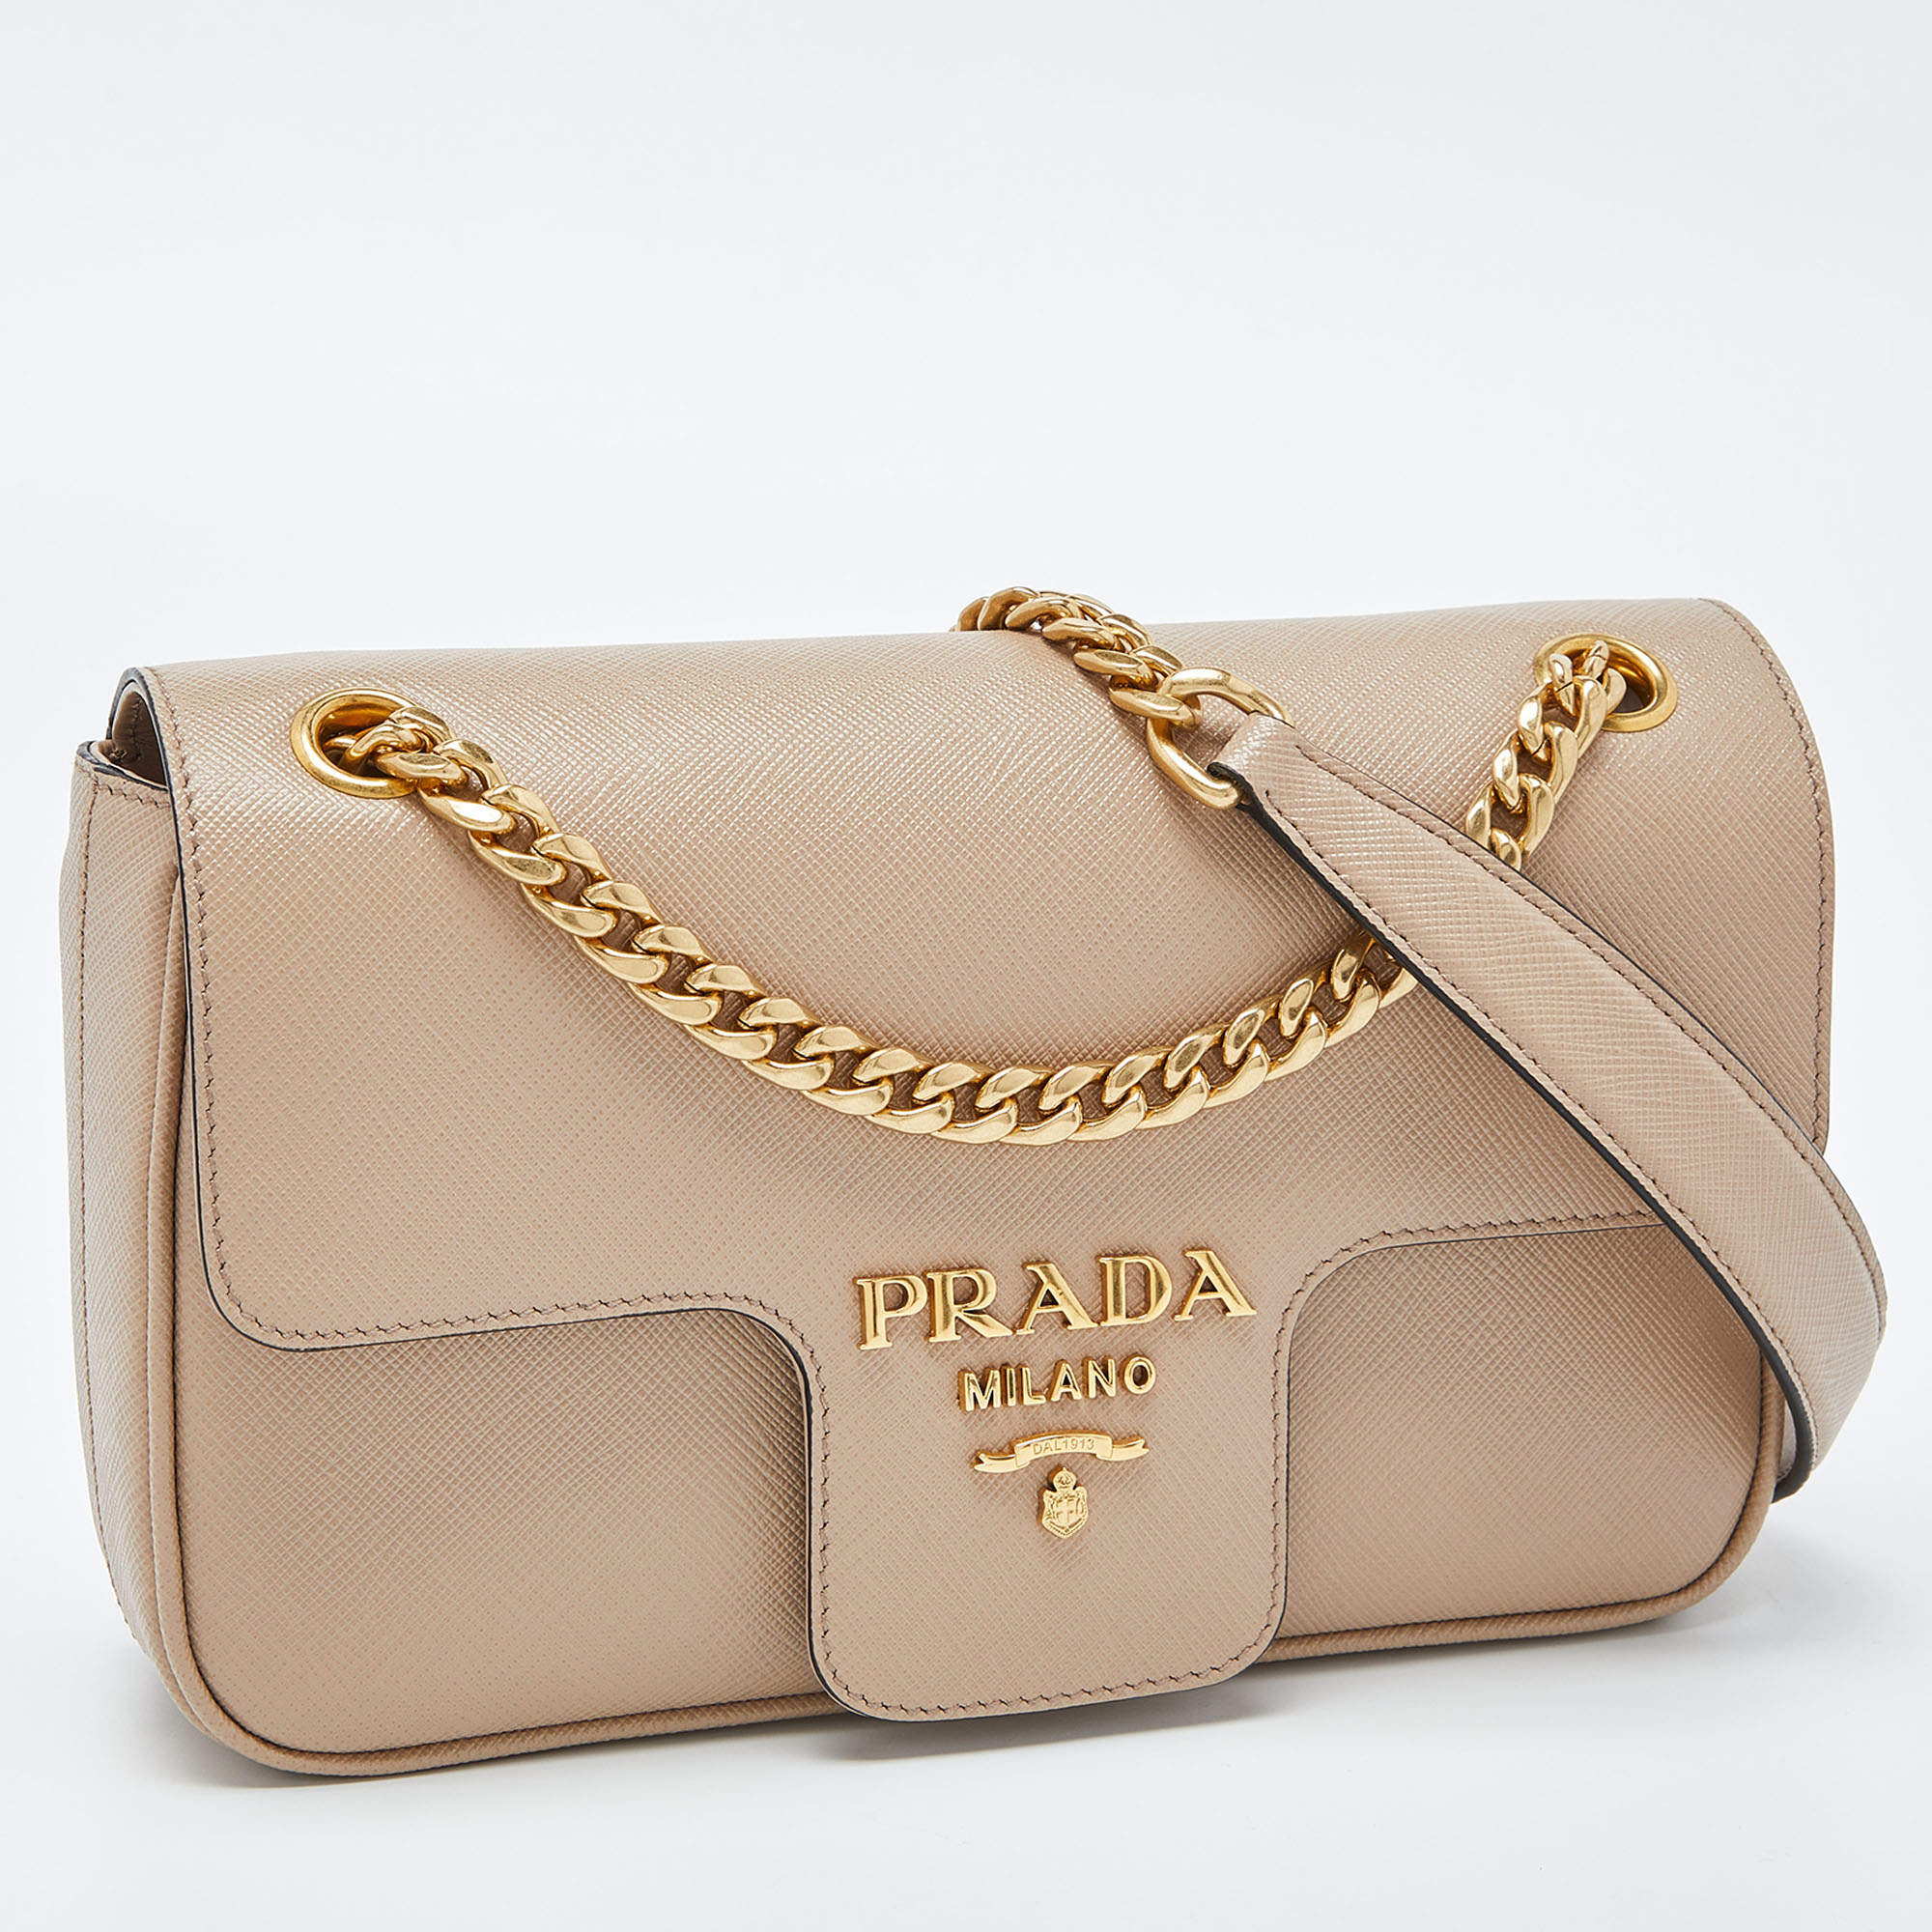 Prada Pattina Pushlock Shoulder Purse Bag